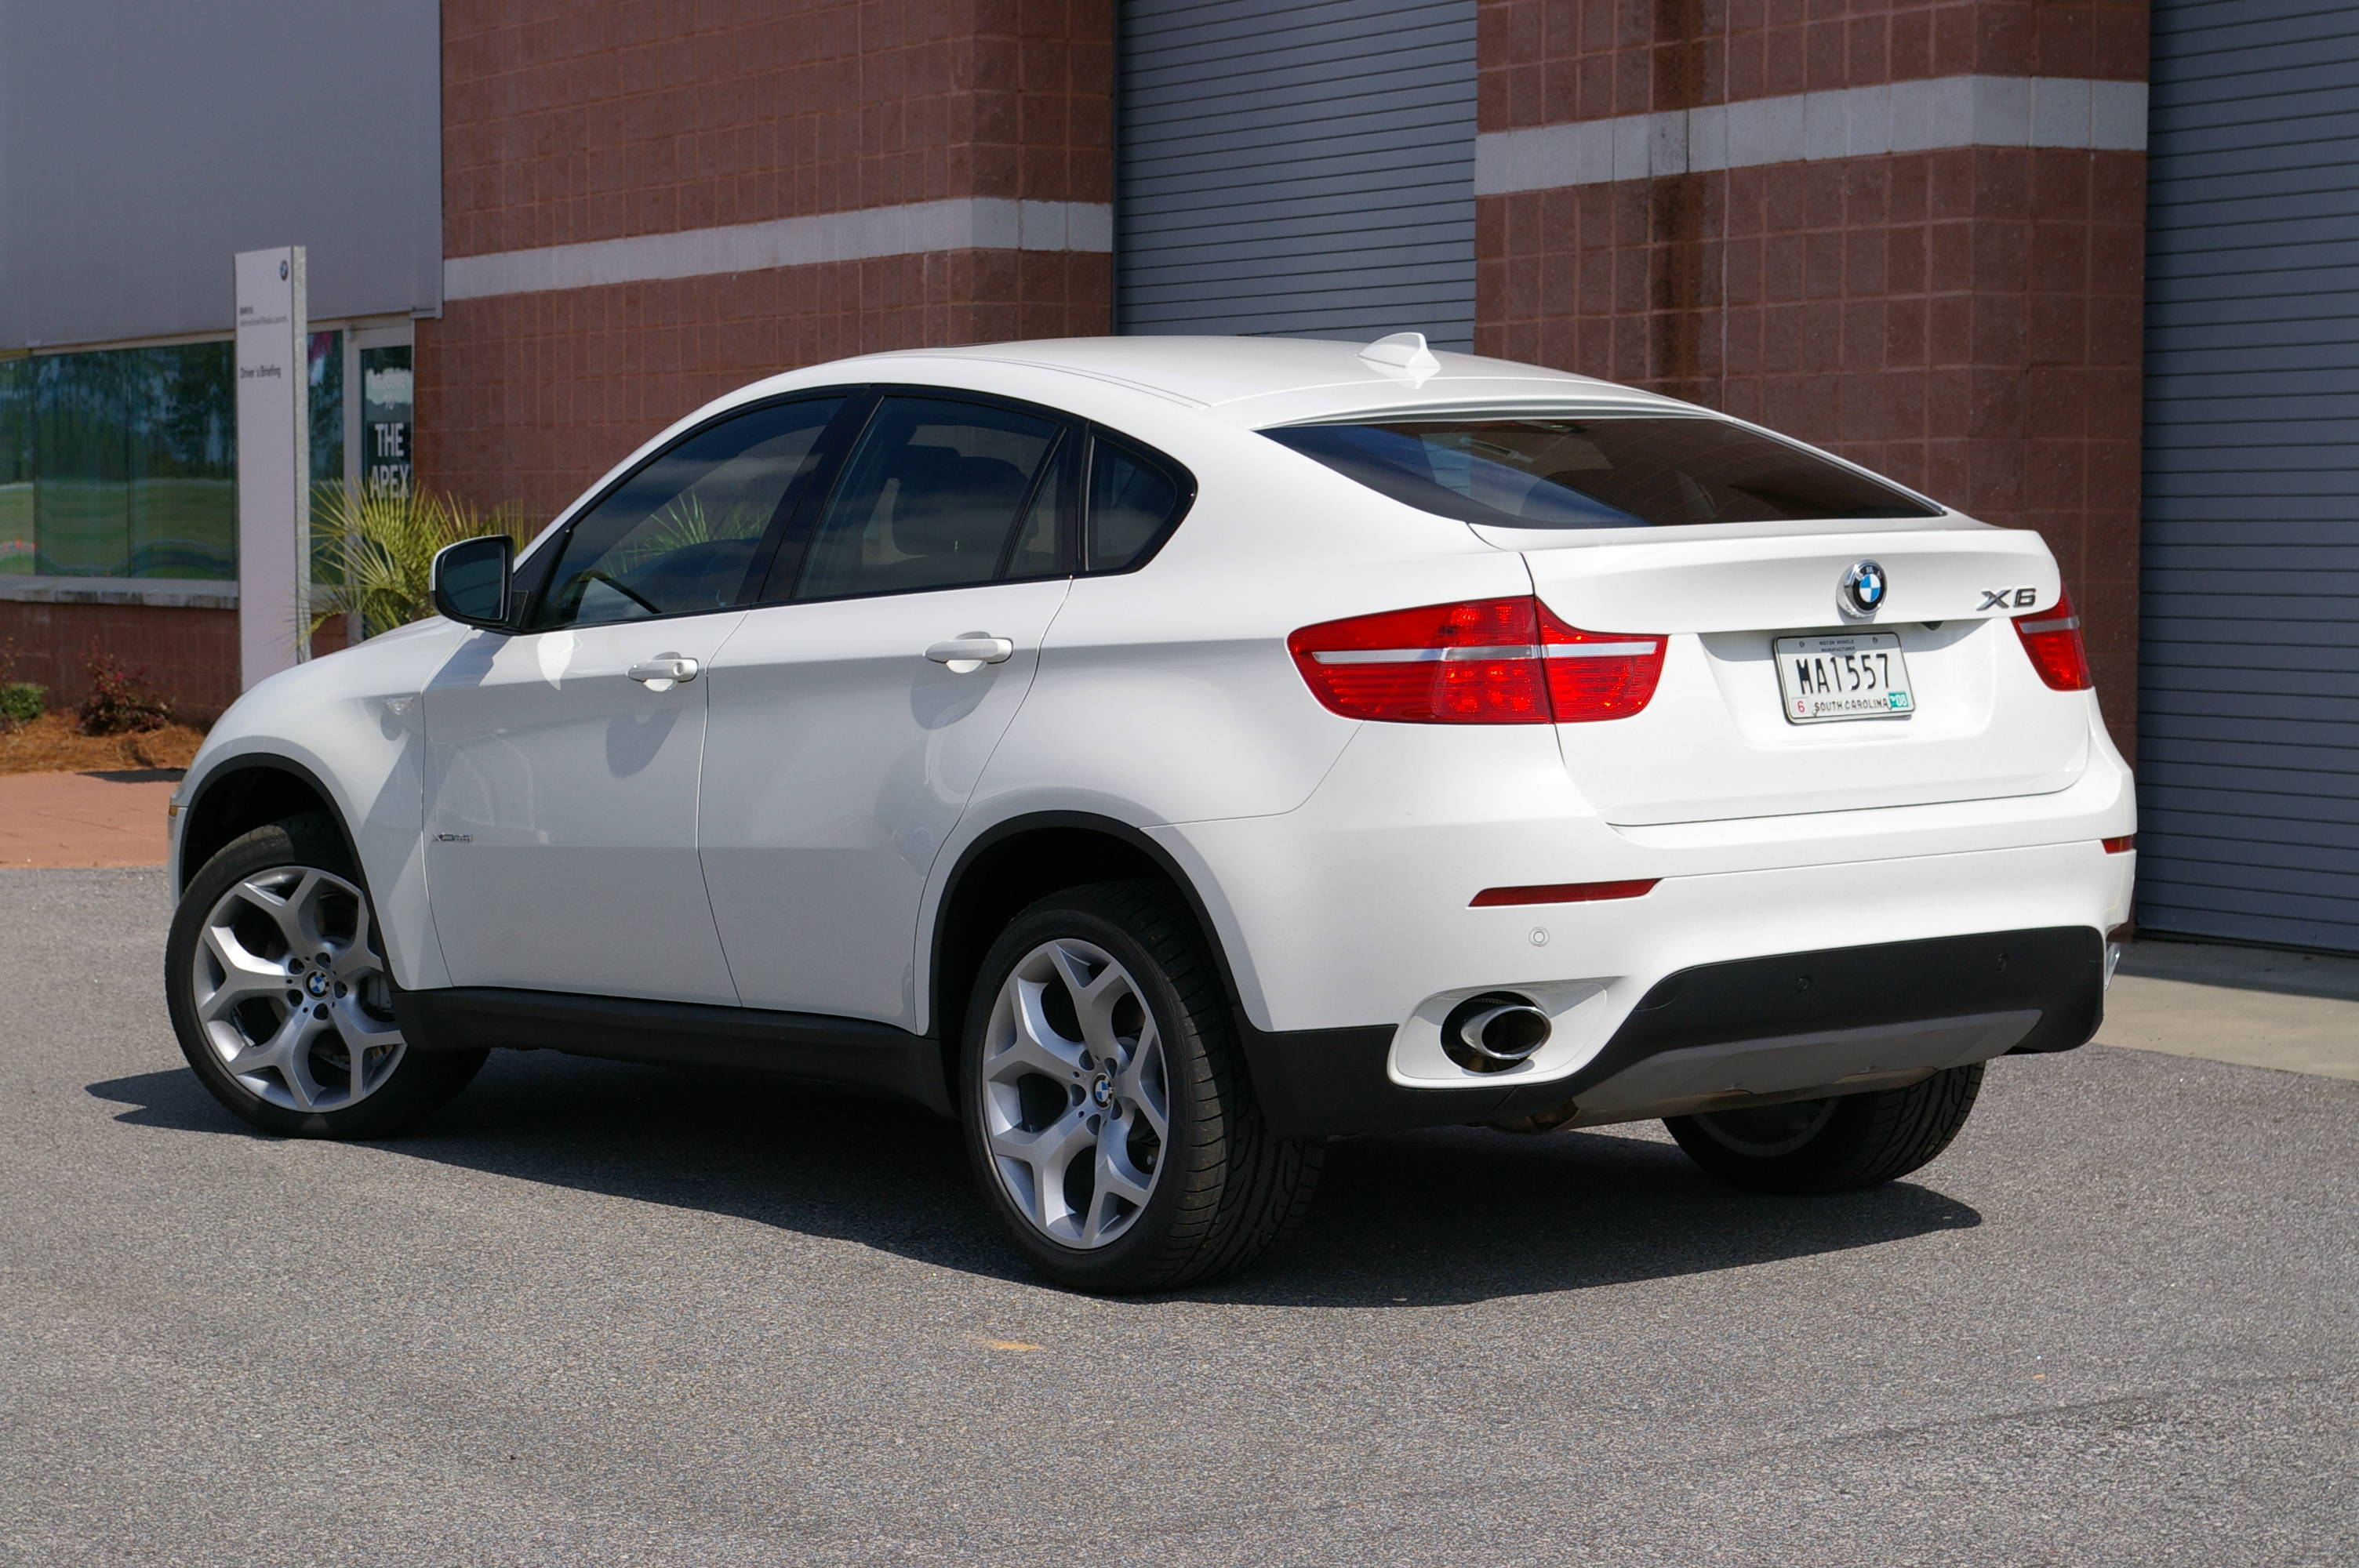 White x6. БМВ Икс 6. BMW x6 2010. BMW x6 2014. БМВ Икс 6 белая.